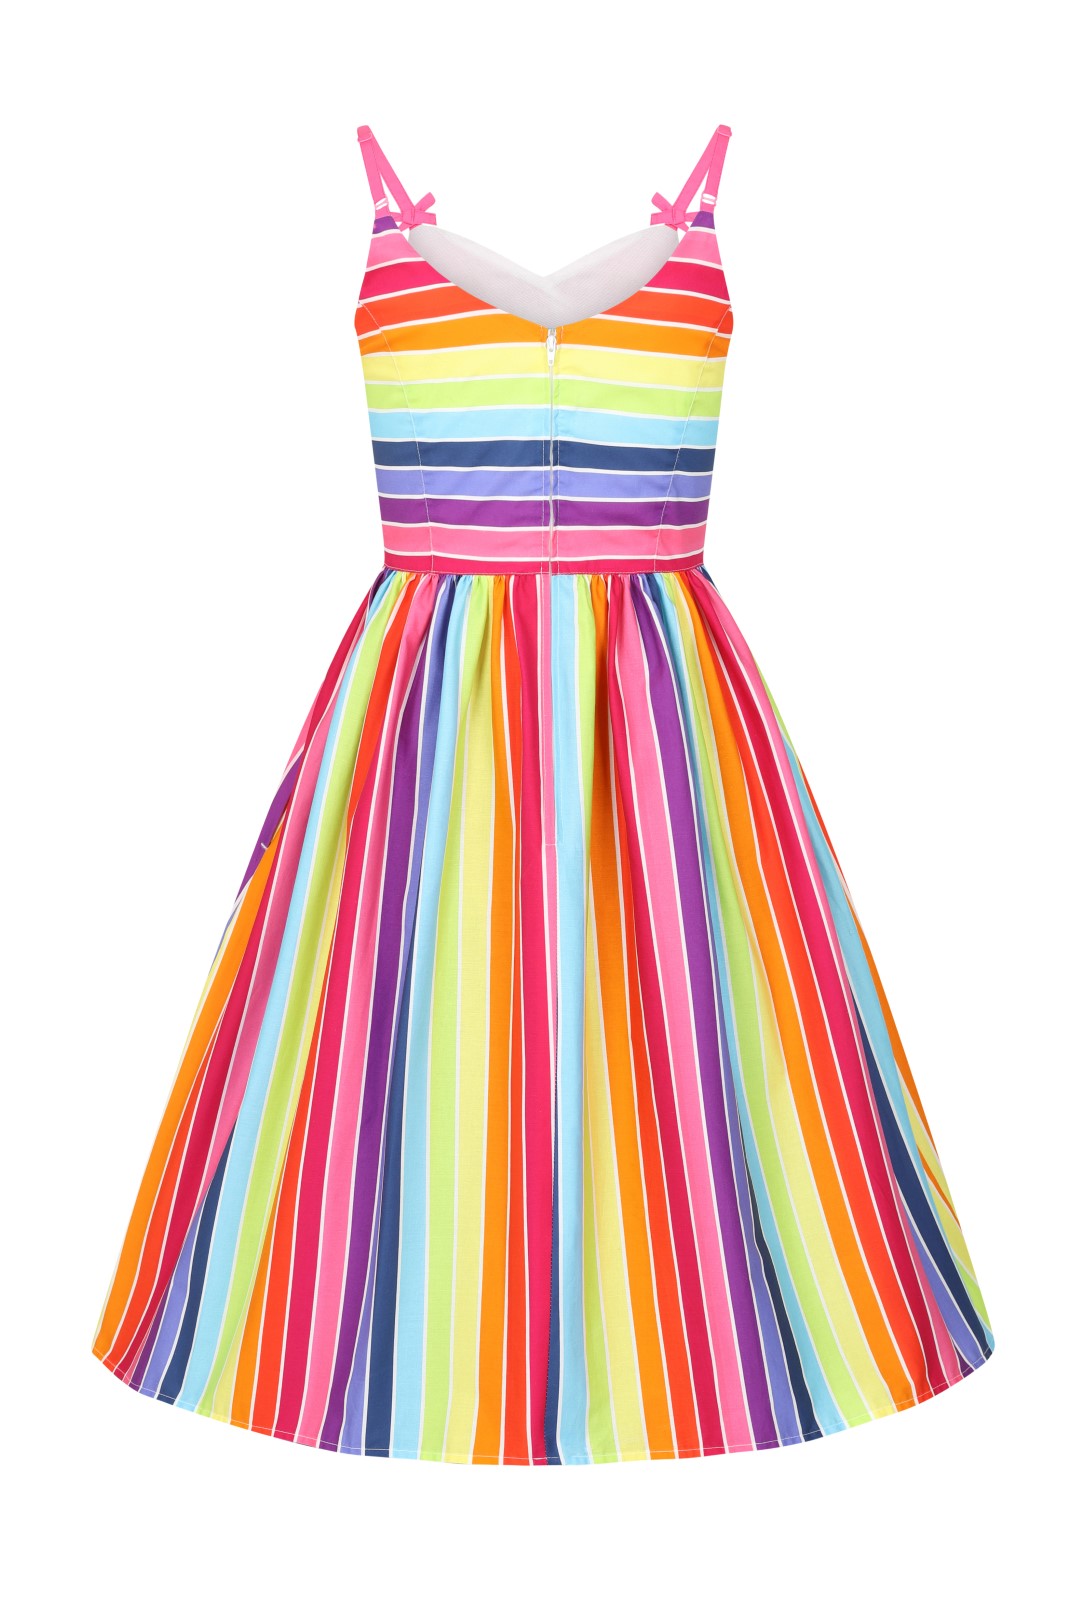 Over The Rainbow 50's Dress